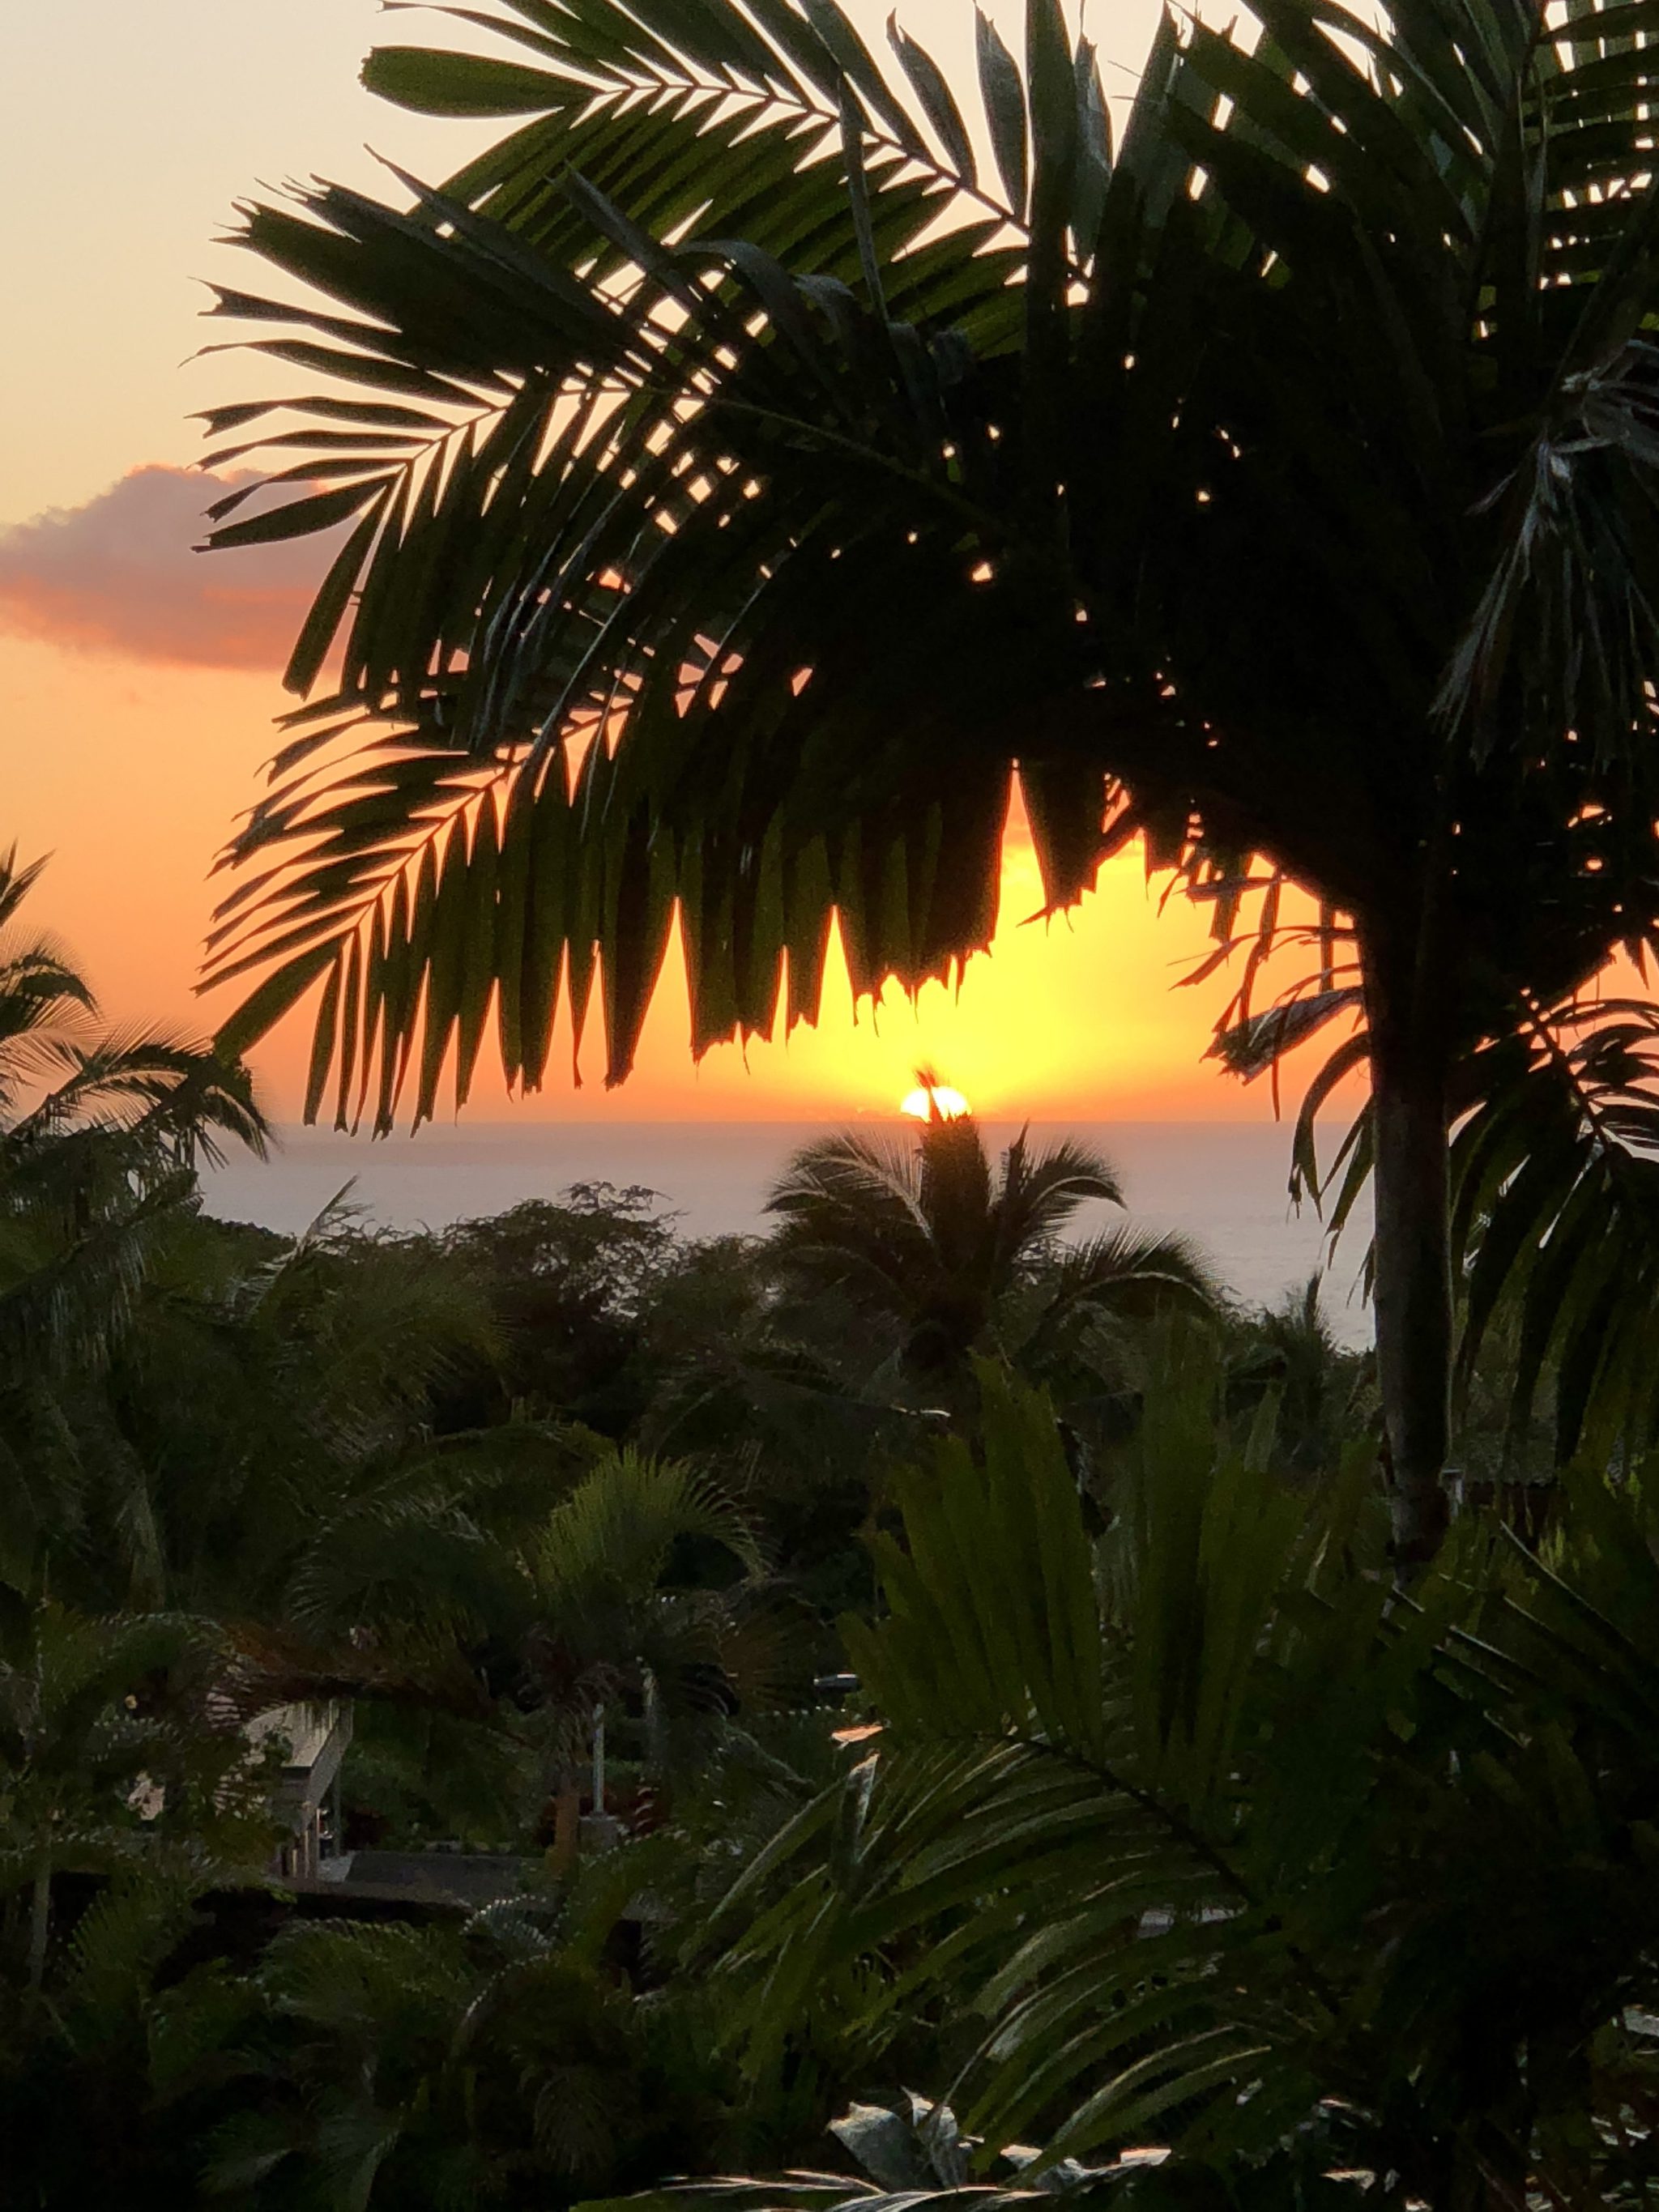 Maui, HI sunset